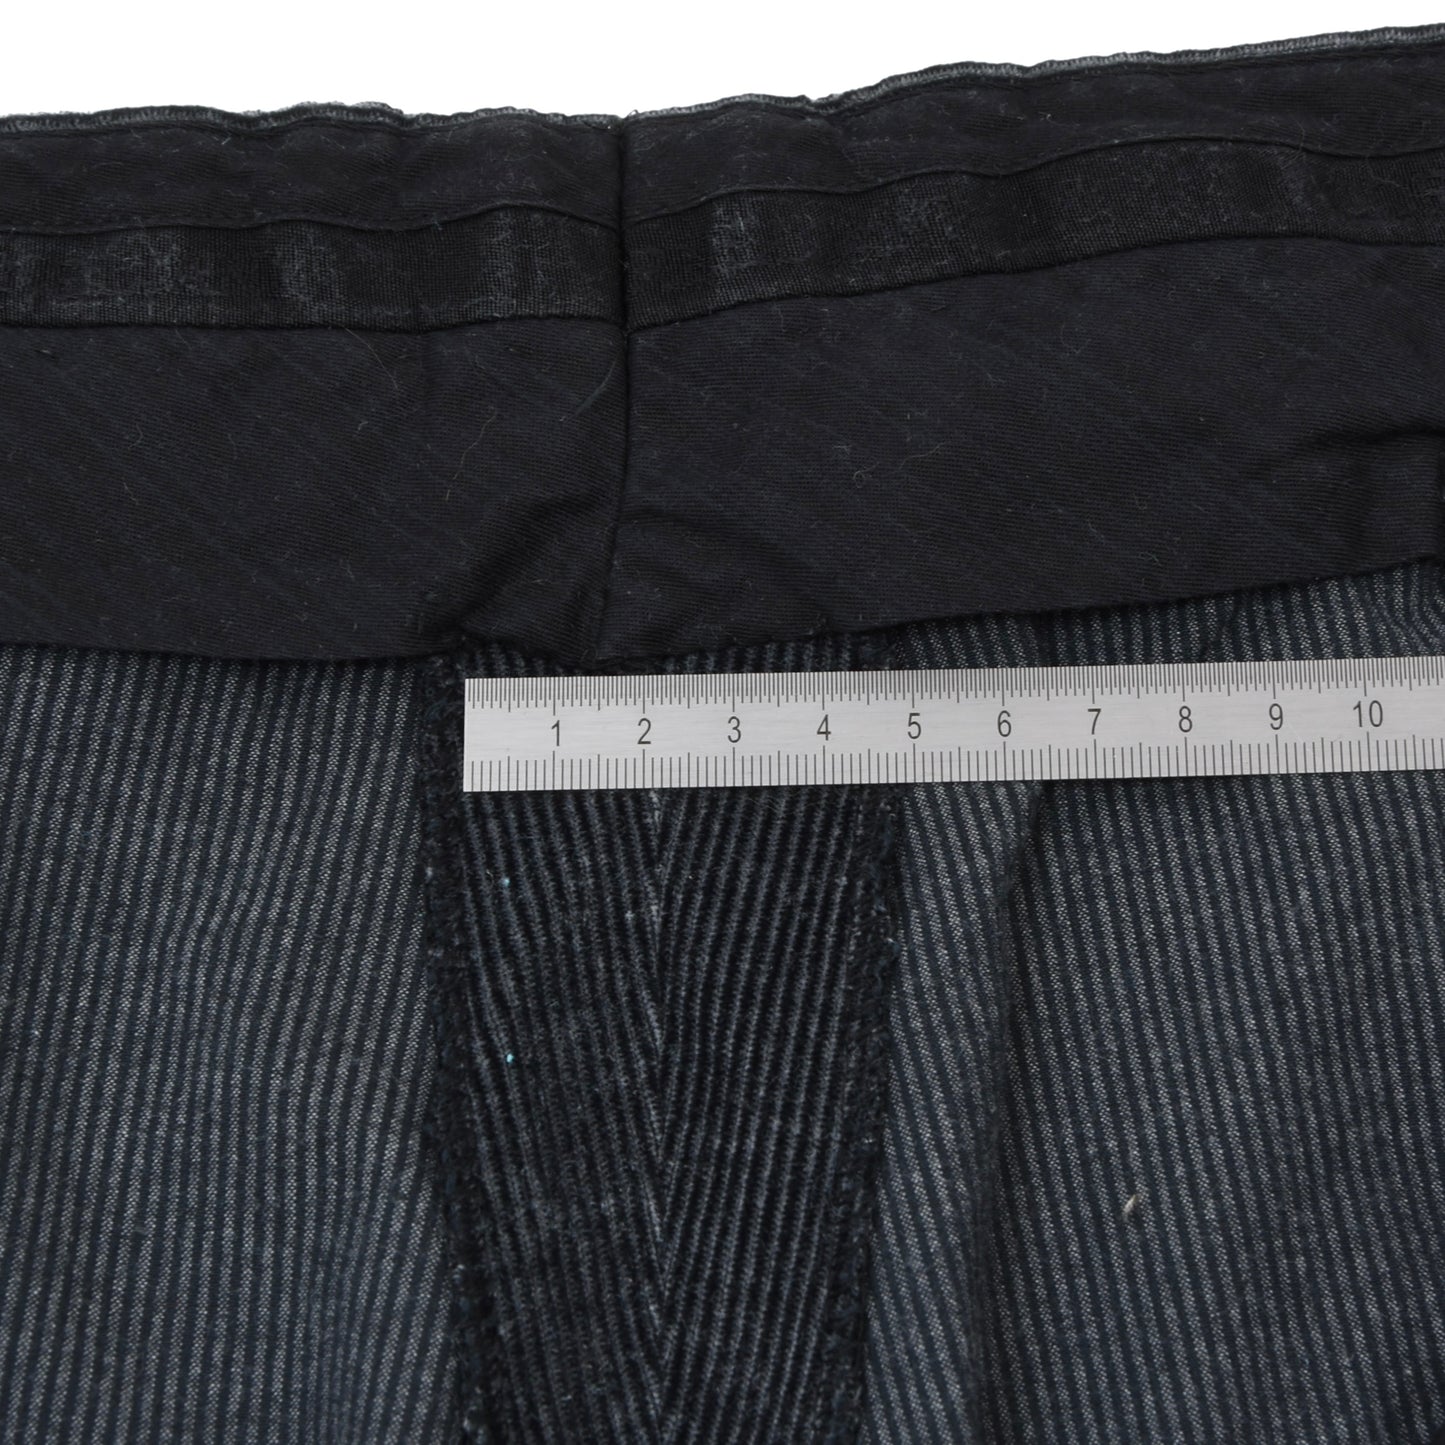 Corneliani Cotton Corduroy Pants Size 58 - Black/Charcoal